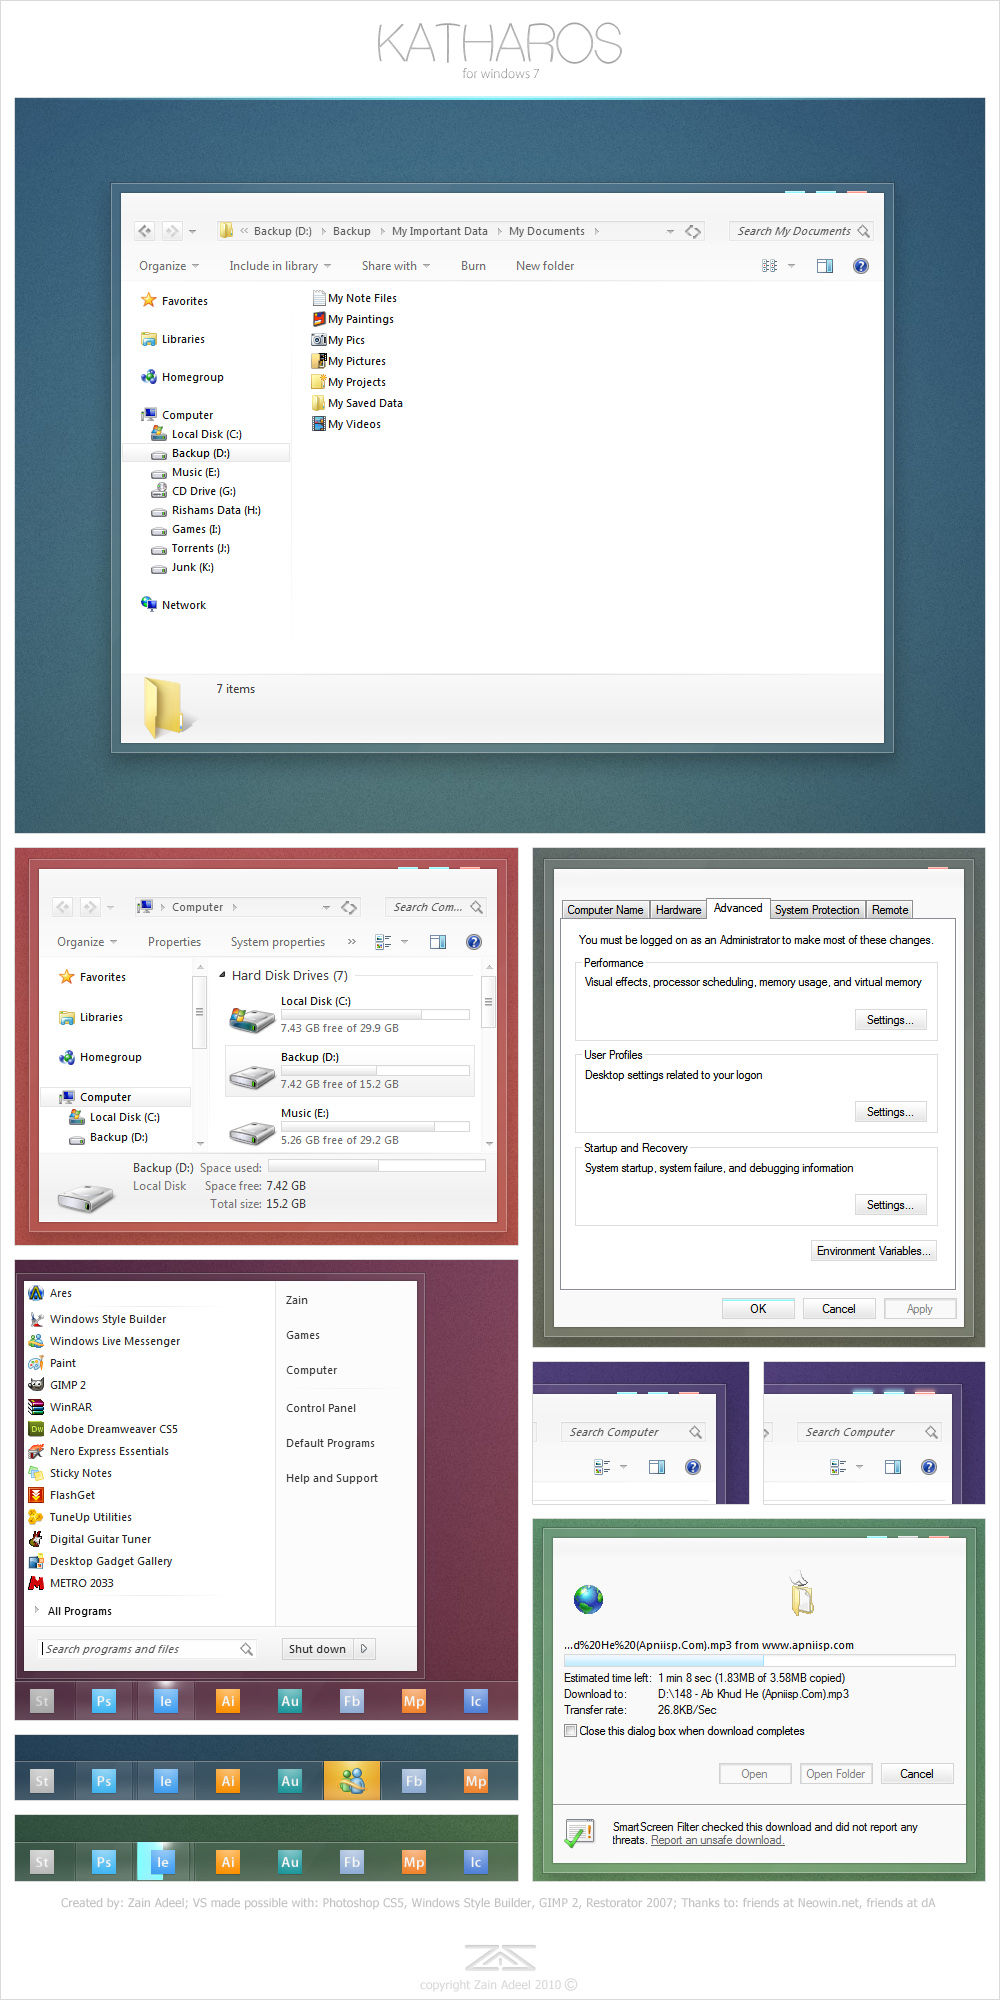 Katharos for windows 7 by_zainadeel(1).jpg